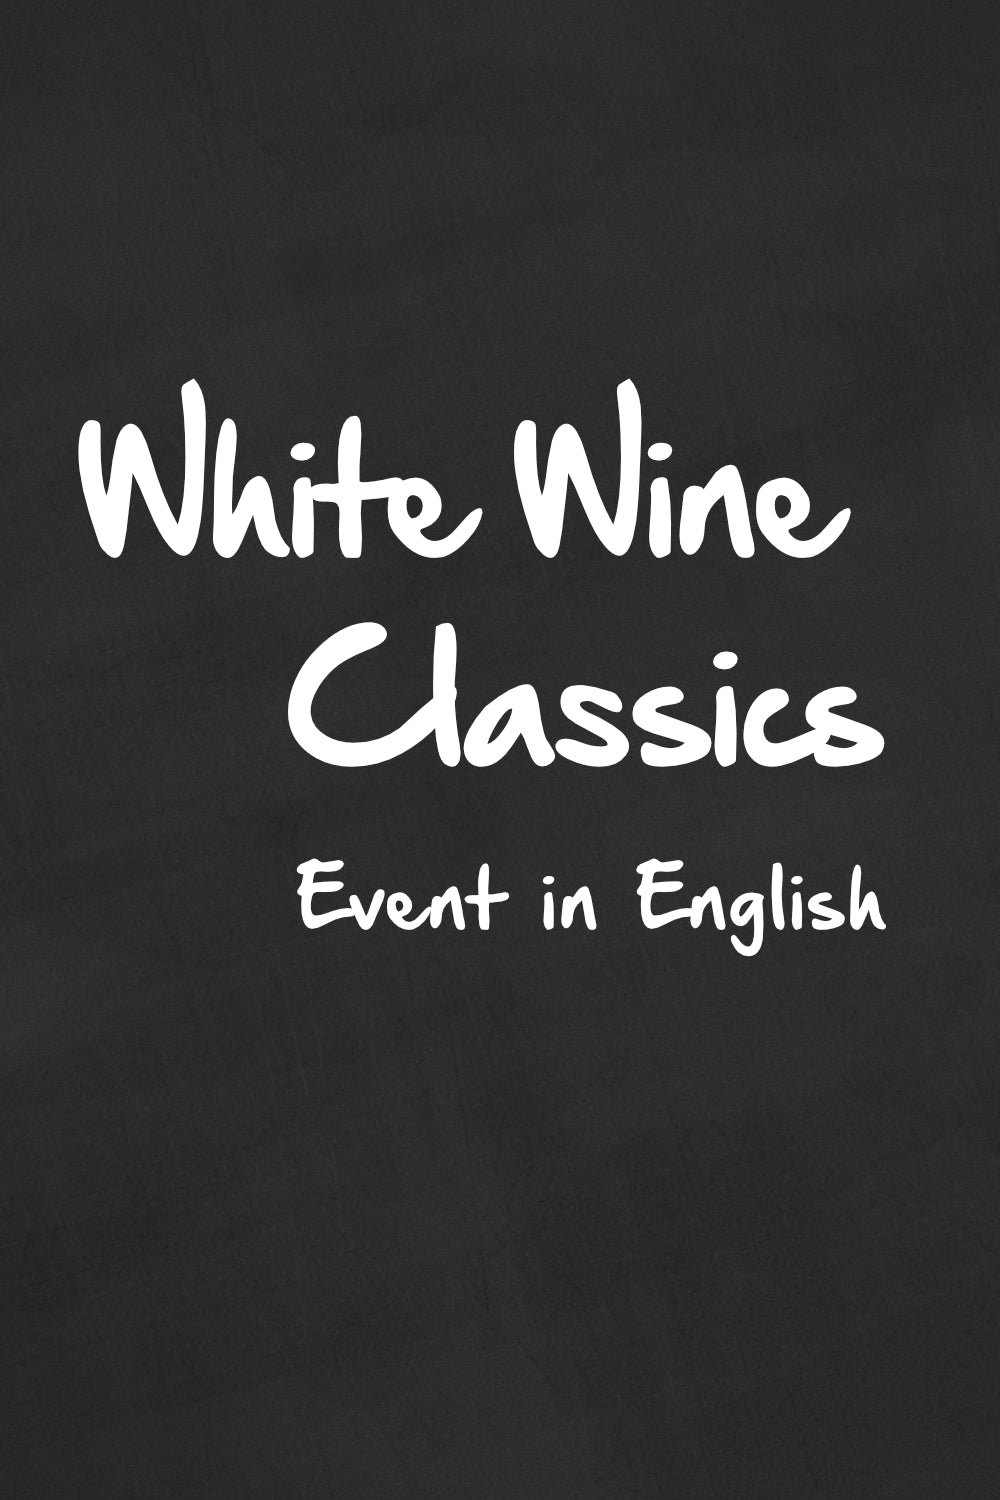 White Wine Tasting: experience white wines